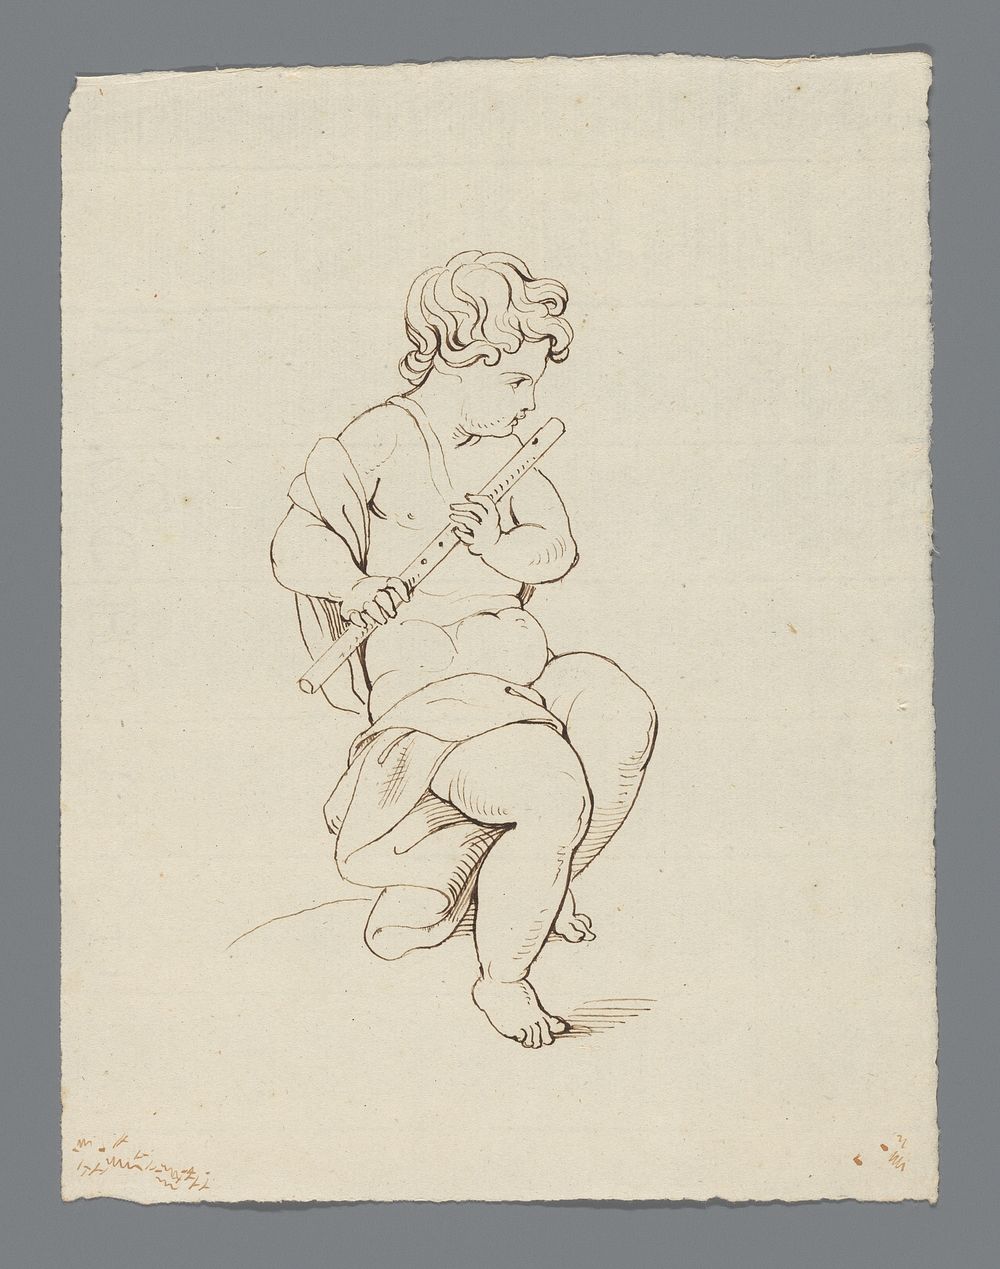 Kind met dwarsfluit (1780 - 1849) by David Pièrre Giottino Humbert de Superville